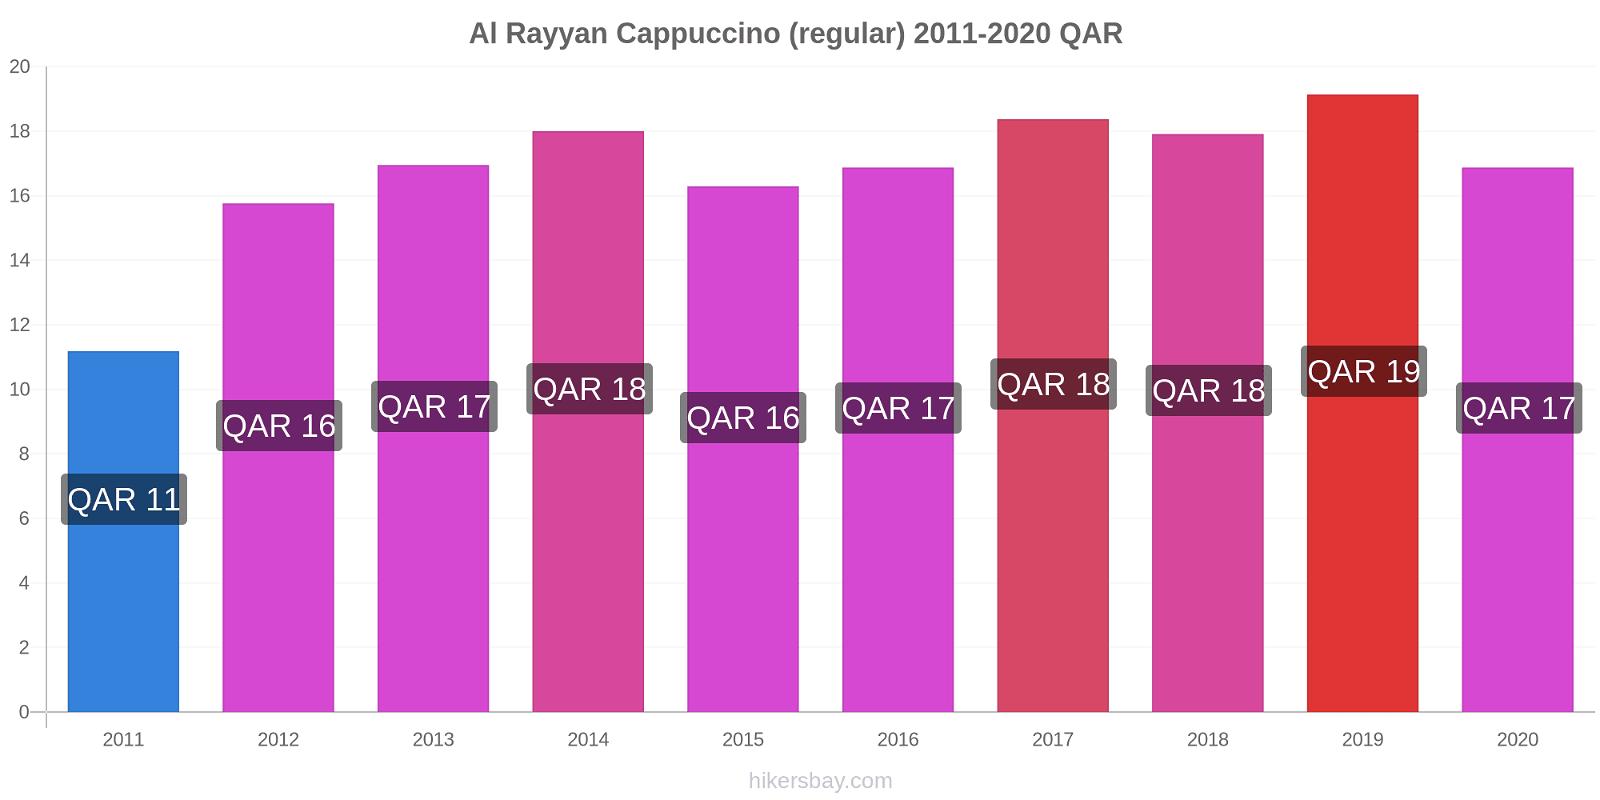 Al Rayyan price changes Cappuccino (regular) hikersbay.com